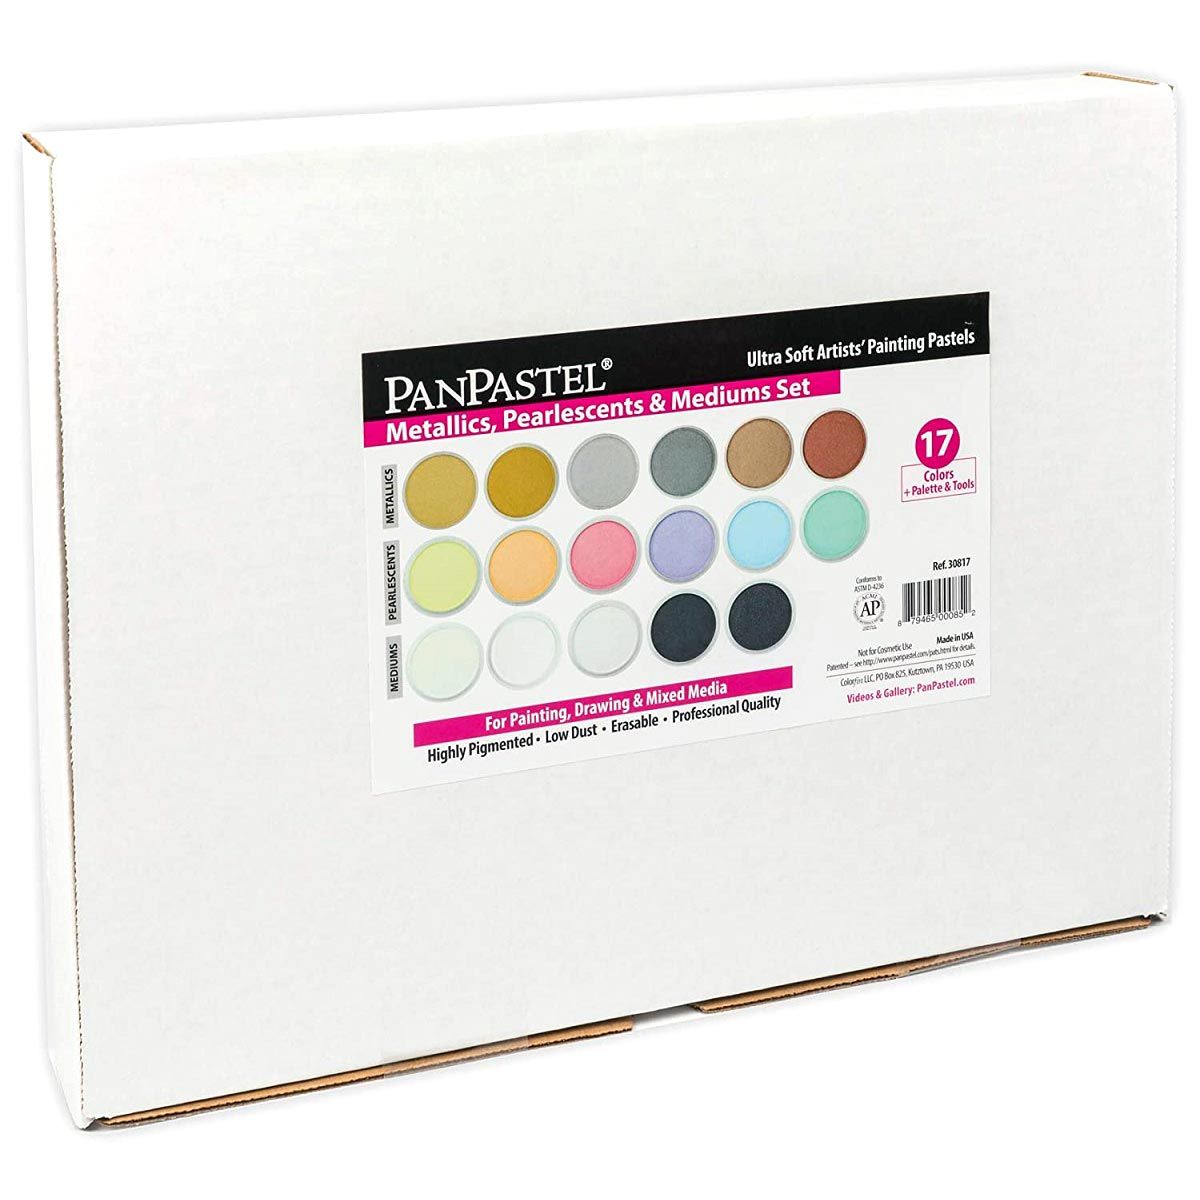 Pan Pastel Metallics Pearlescent & Mediums & Tools - 17 Colour Set